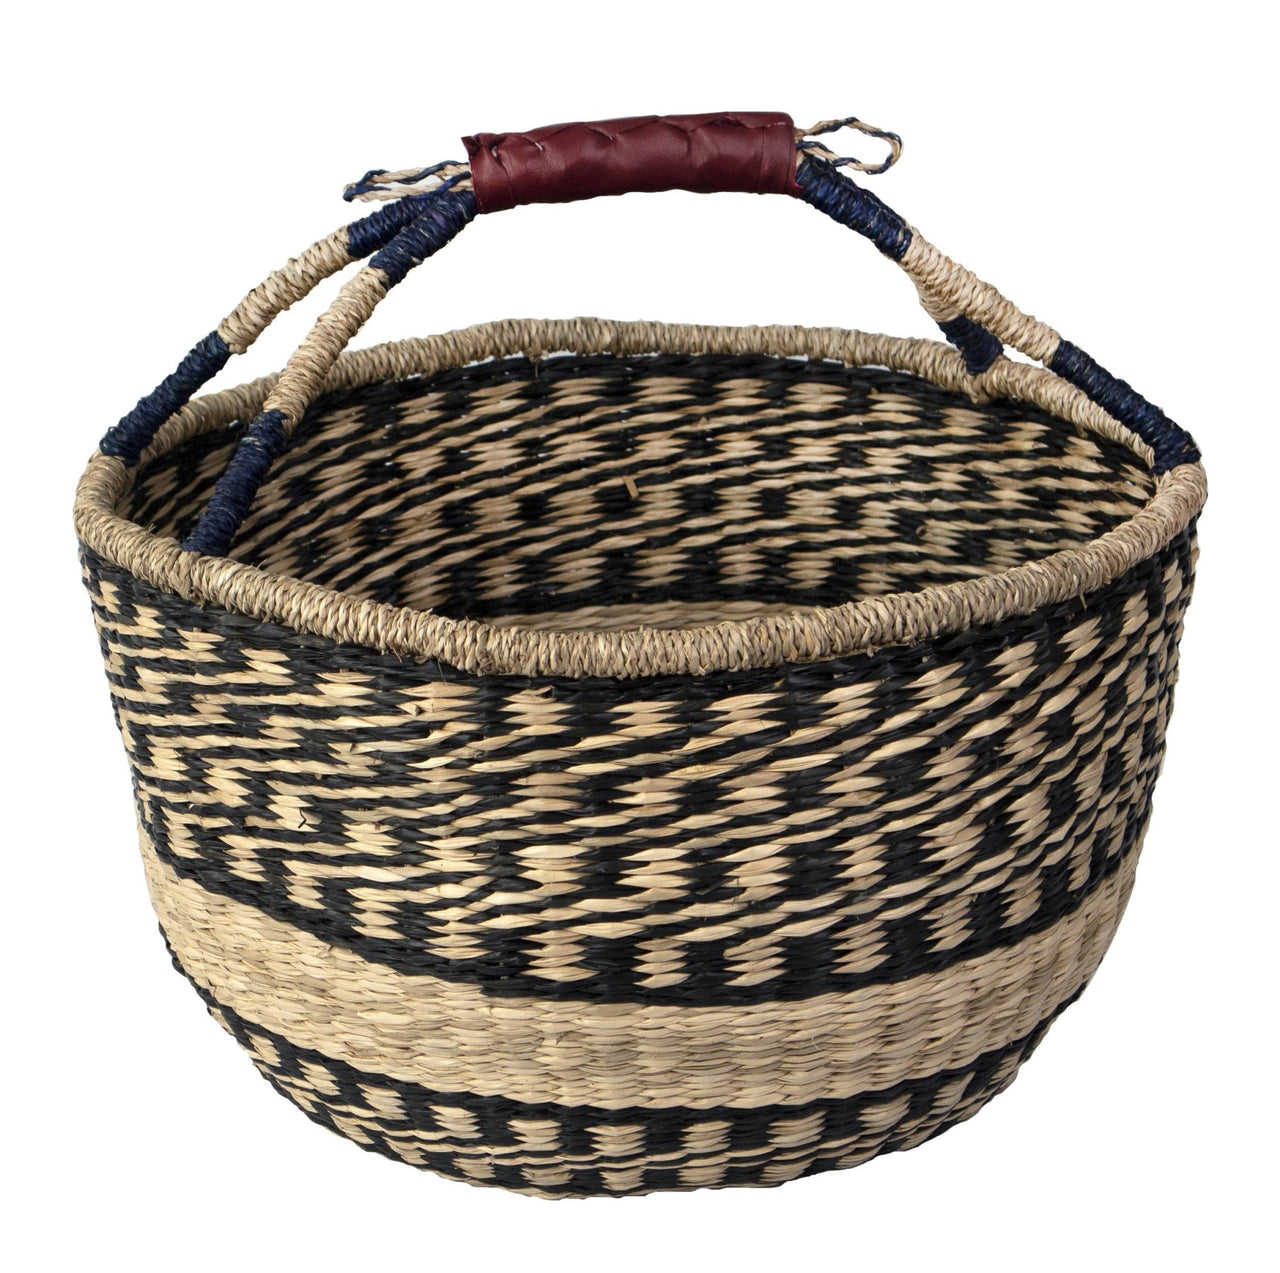 Bolga Basket.Woven Picnic & Market Baskets - Rubbish Restyled